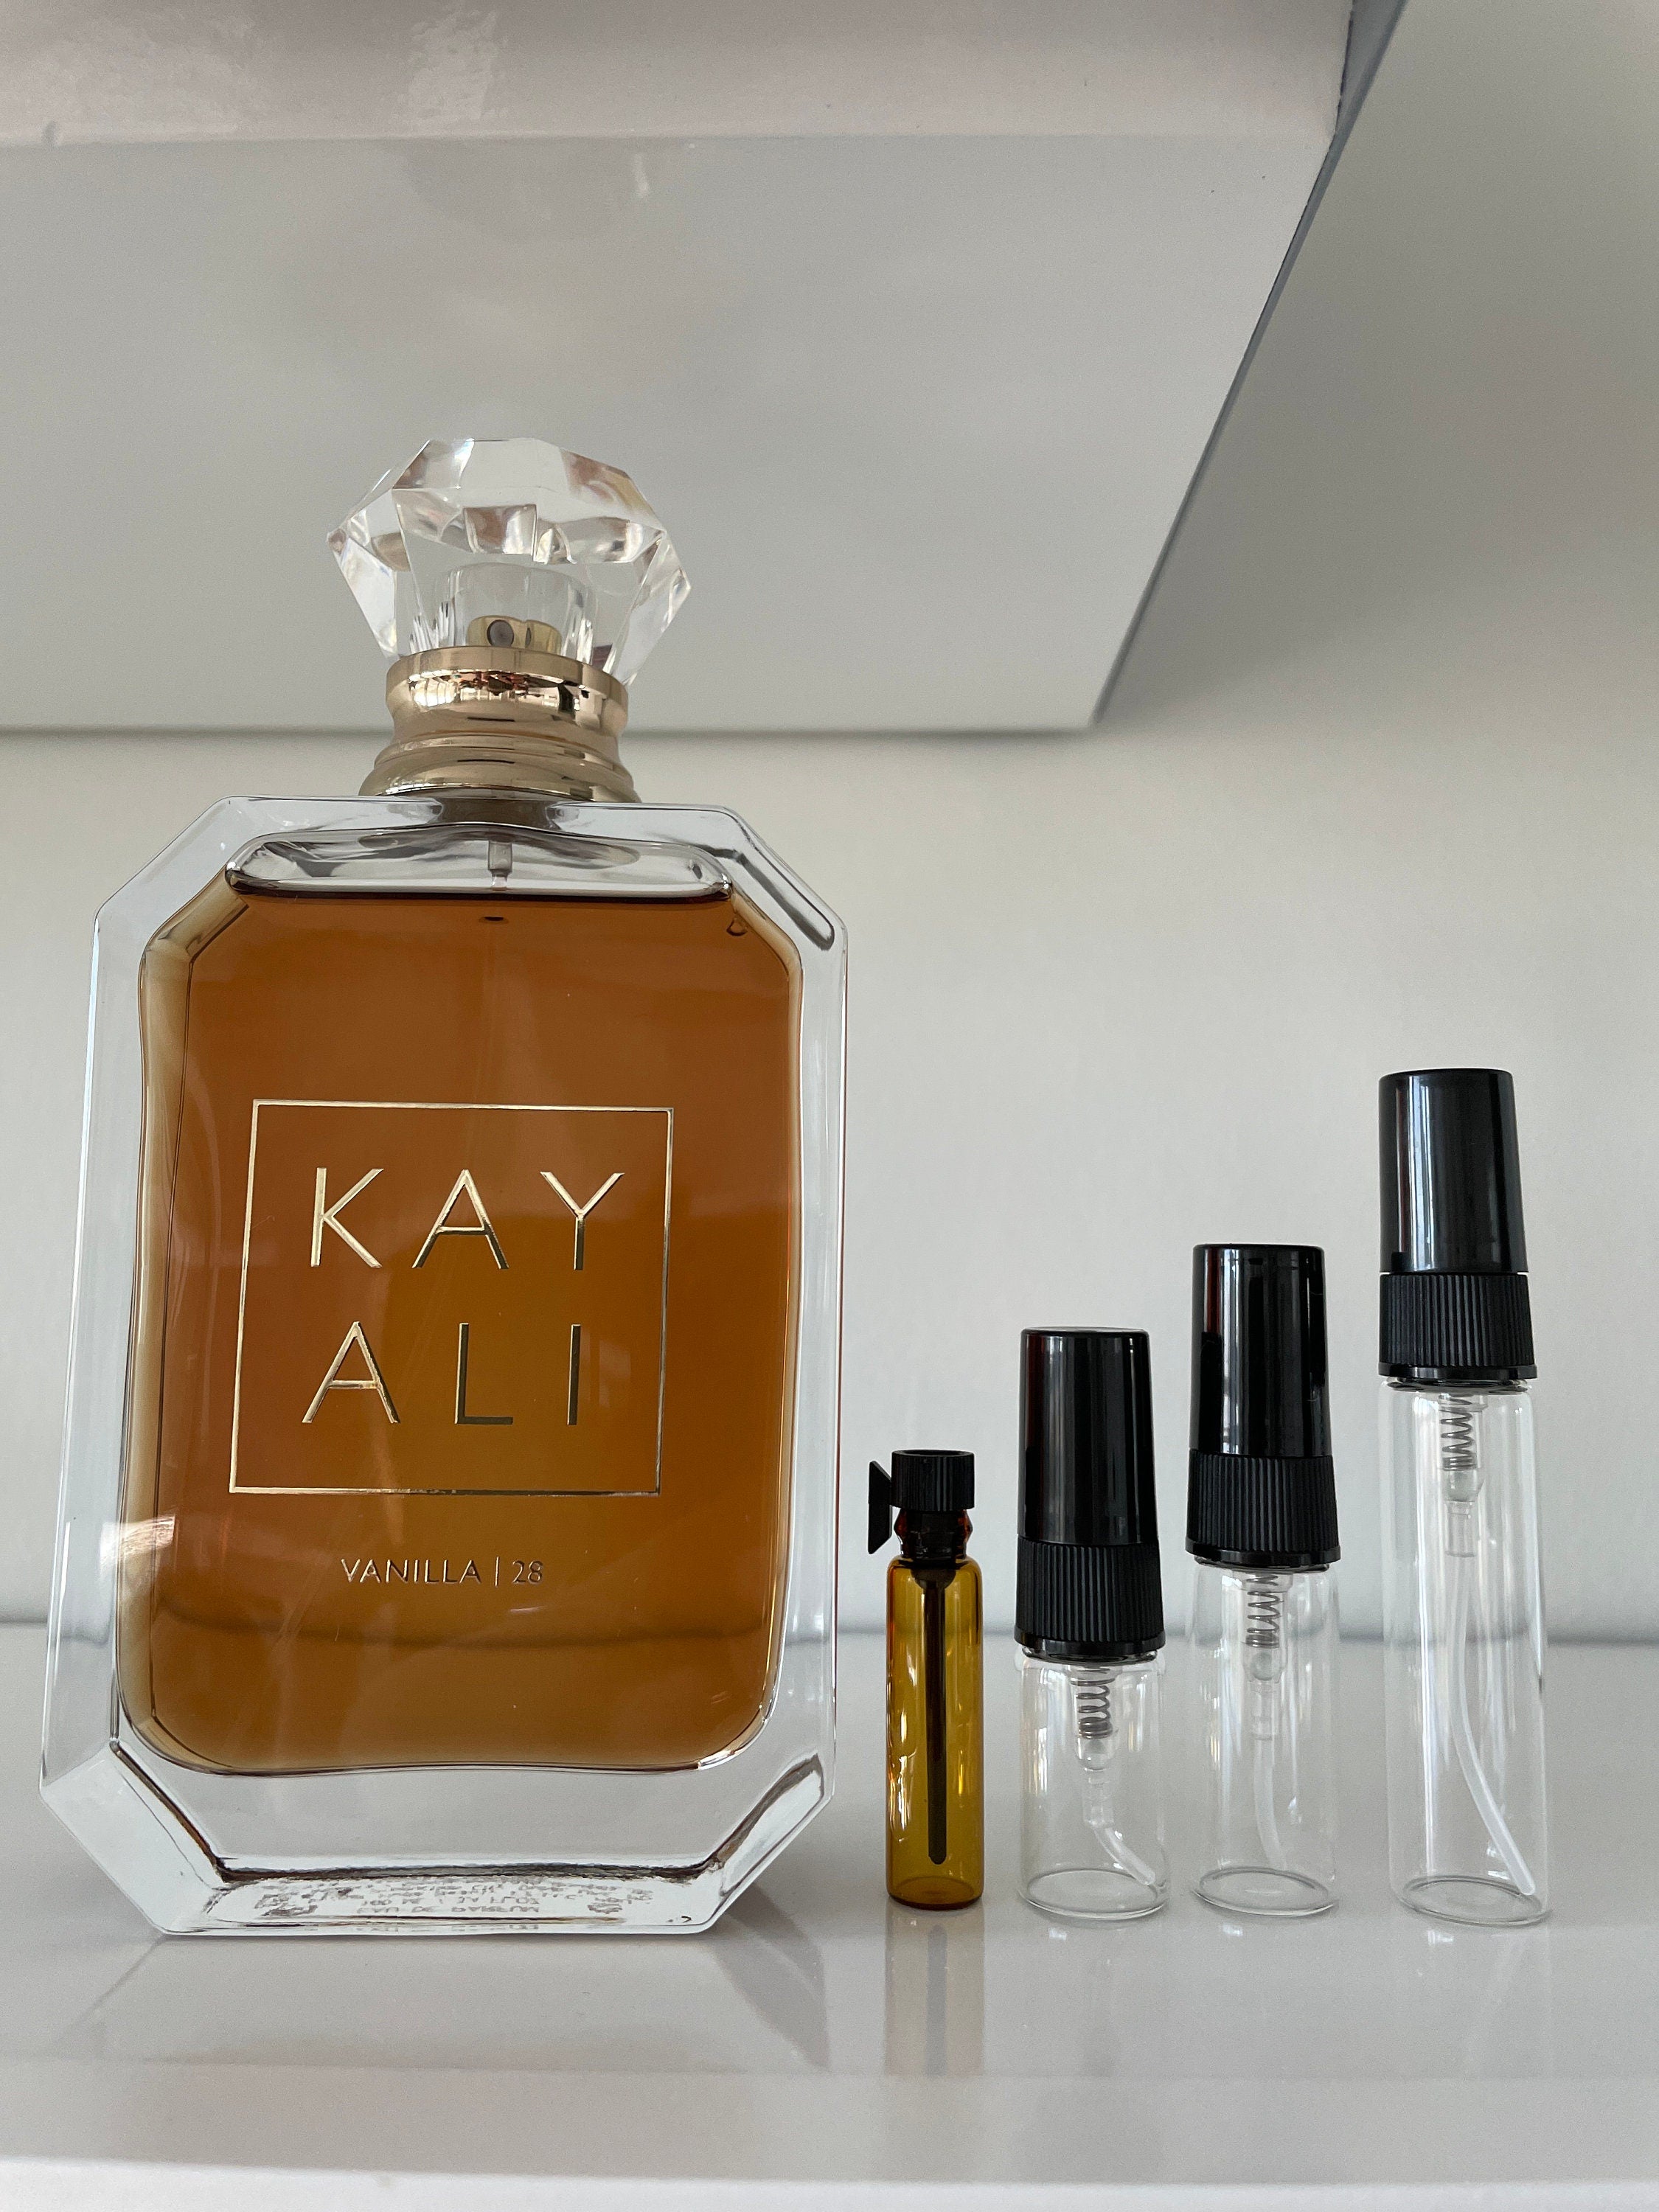 Kayali Vanilla 28 EDP | Fragrance Samples and Decants – ScentBarCA